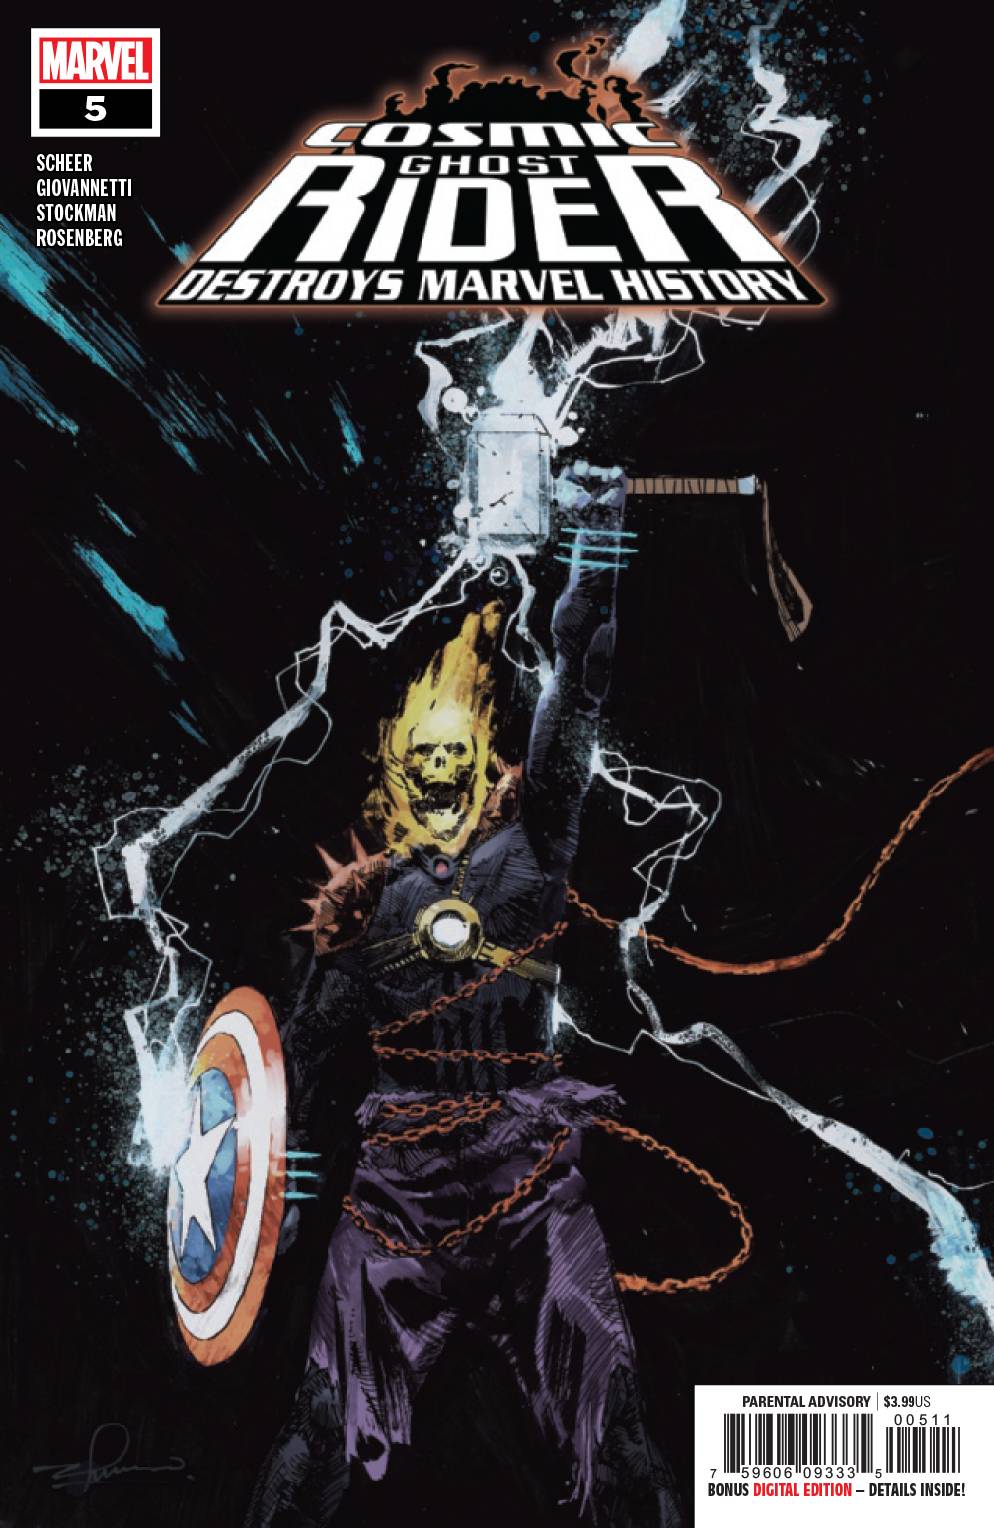 Cosmic Ghost Rider Destroys Marvel History #5 (Of 6)